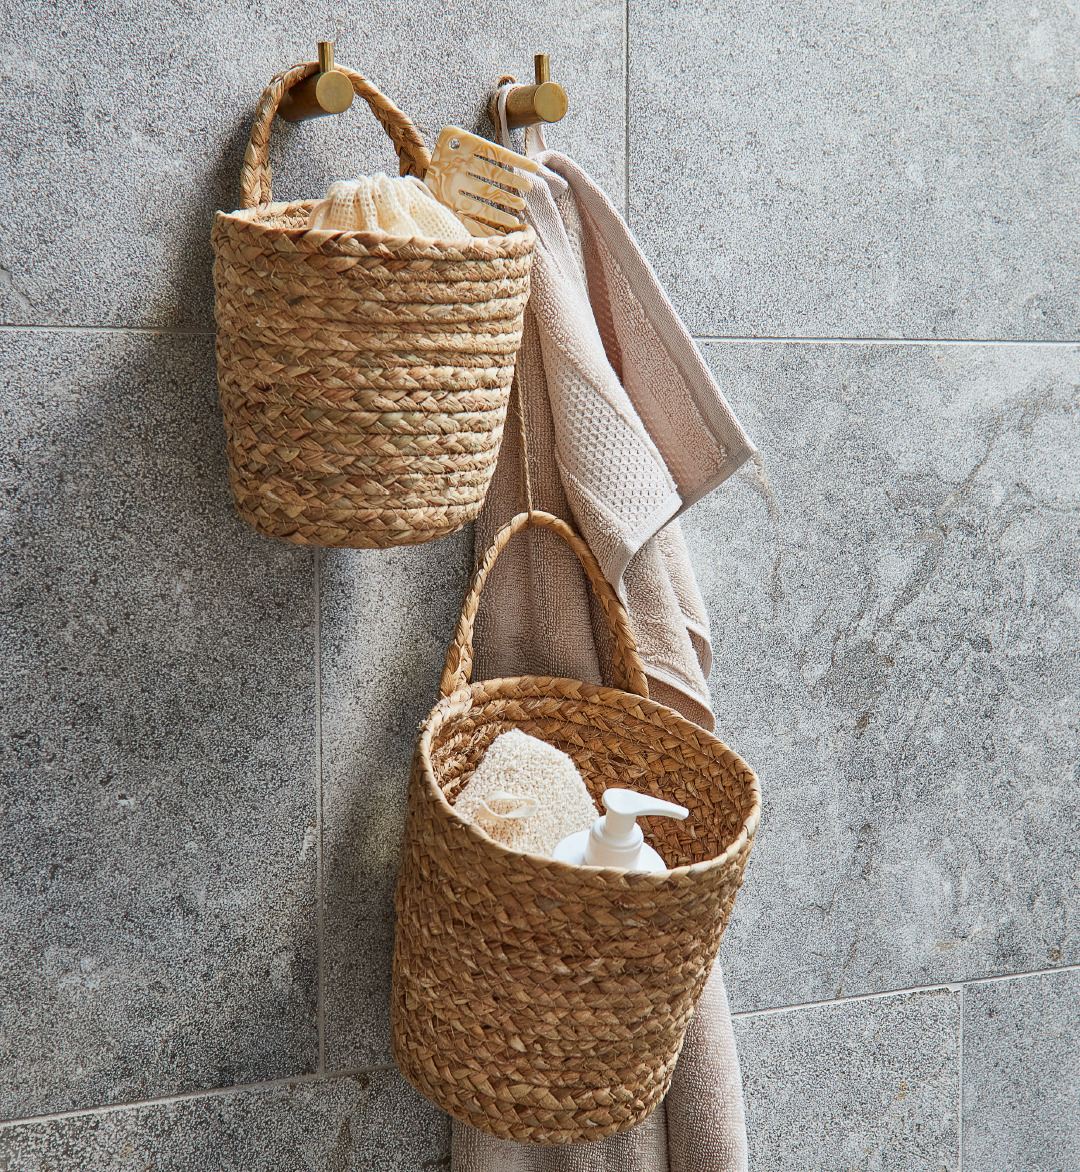 Cesti pensili decorativi appesi su parete da bagno accanto asciugamano beige